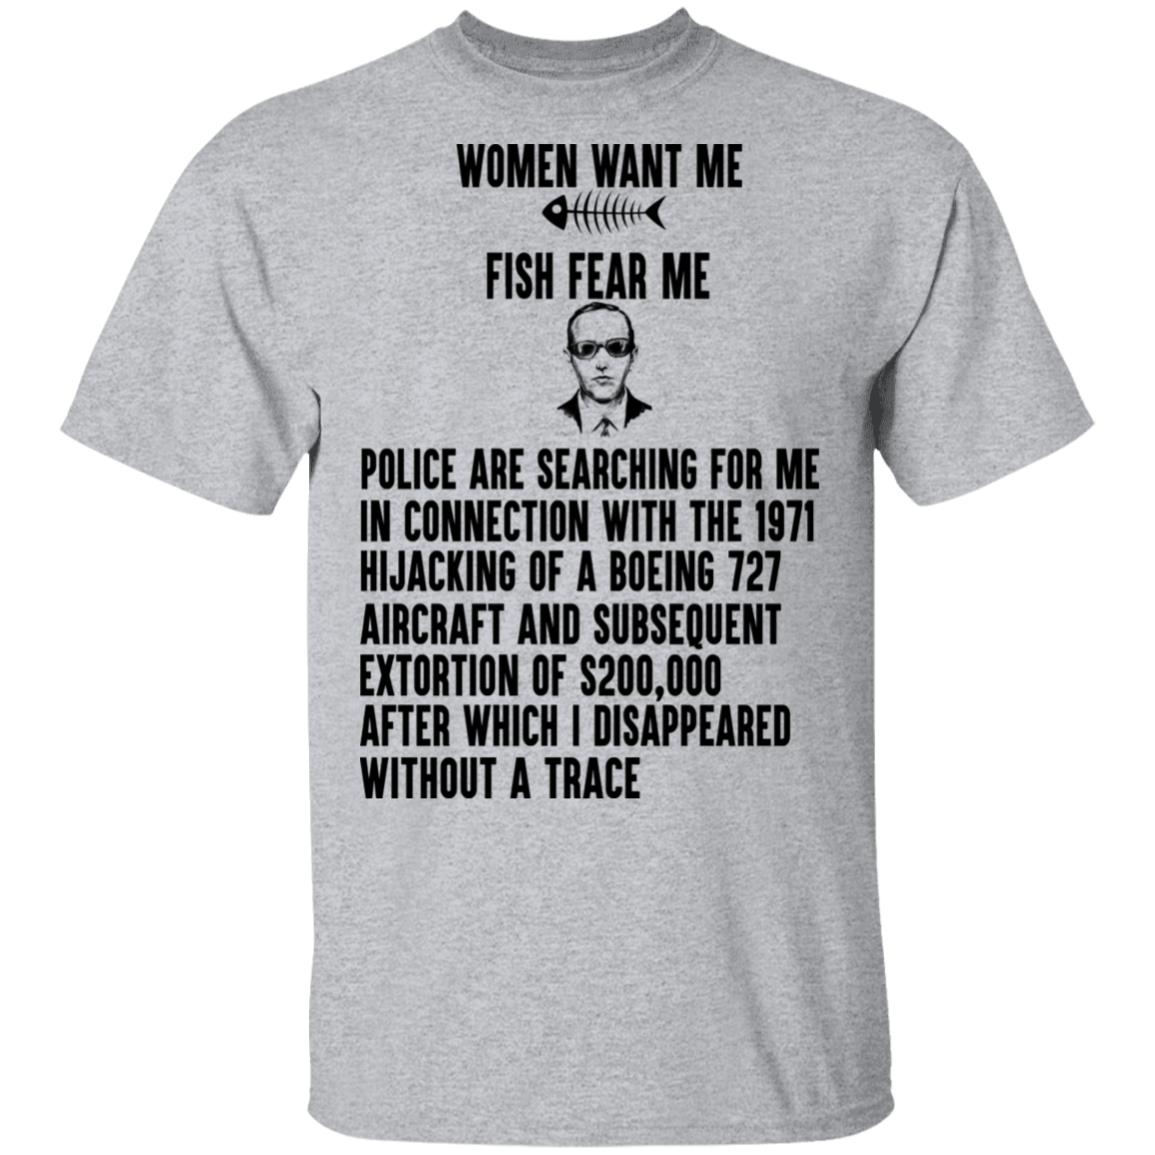 Want Me Fish Fear Me Funny Fishing T-Shirt